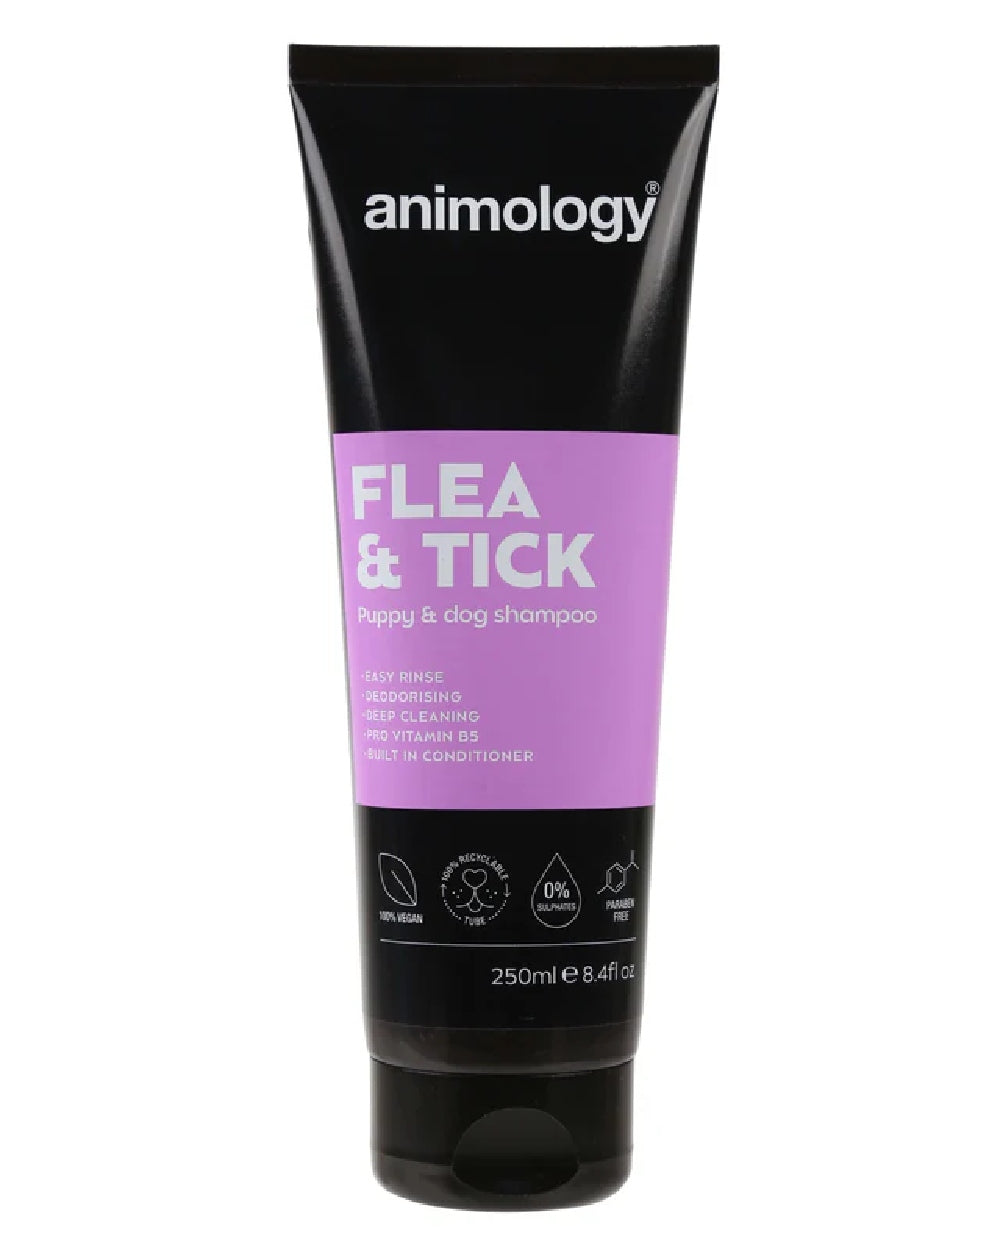 Animology Flea and Tick Shampoo 250ml on white background